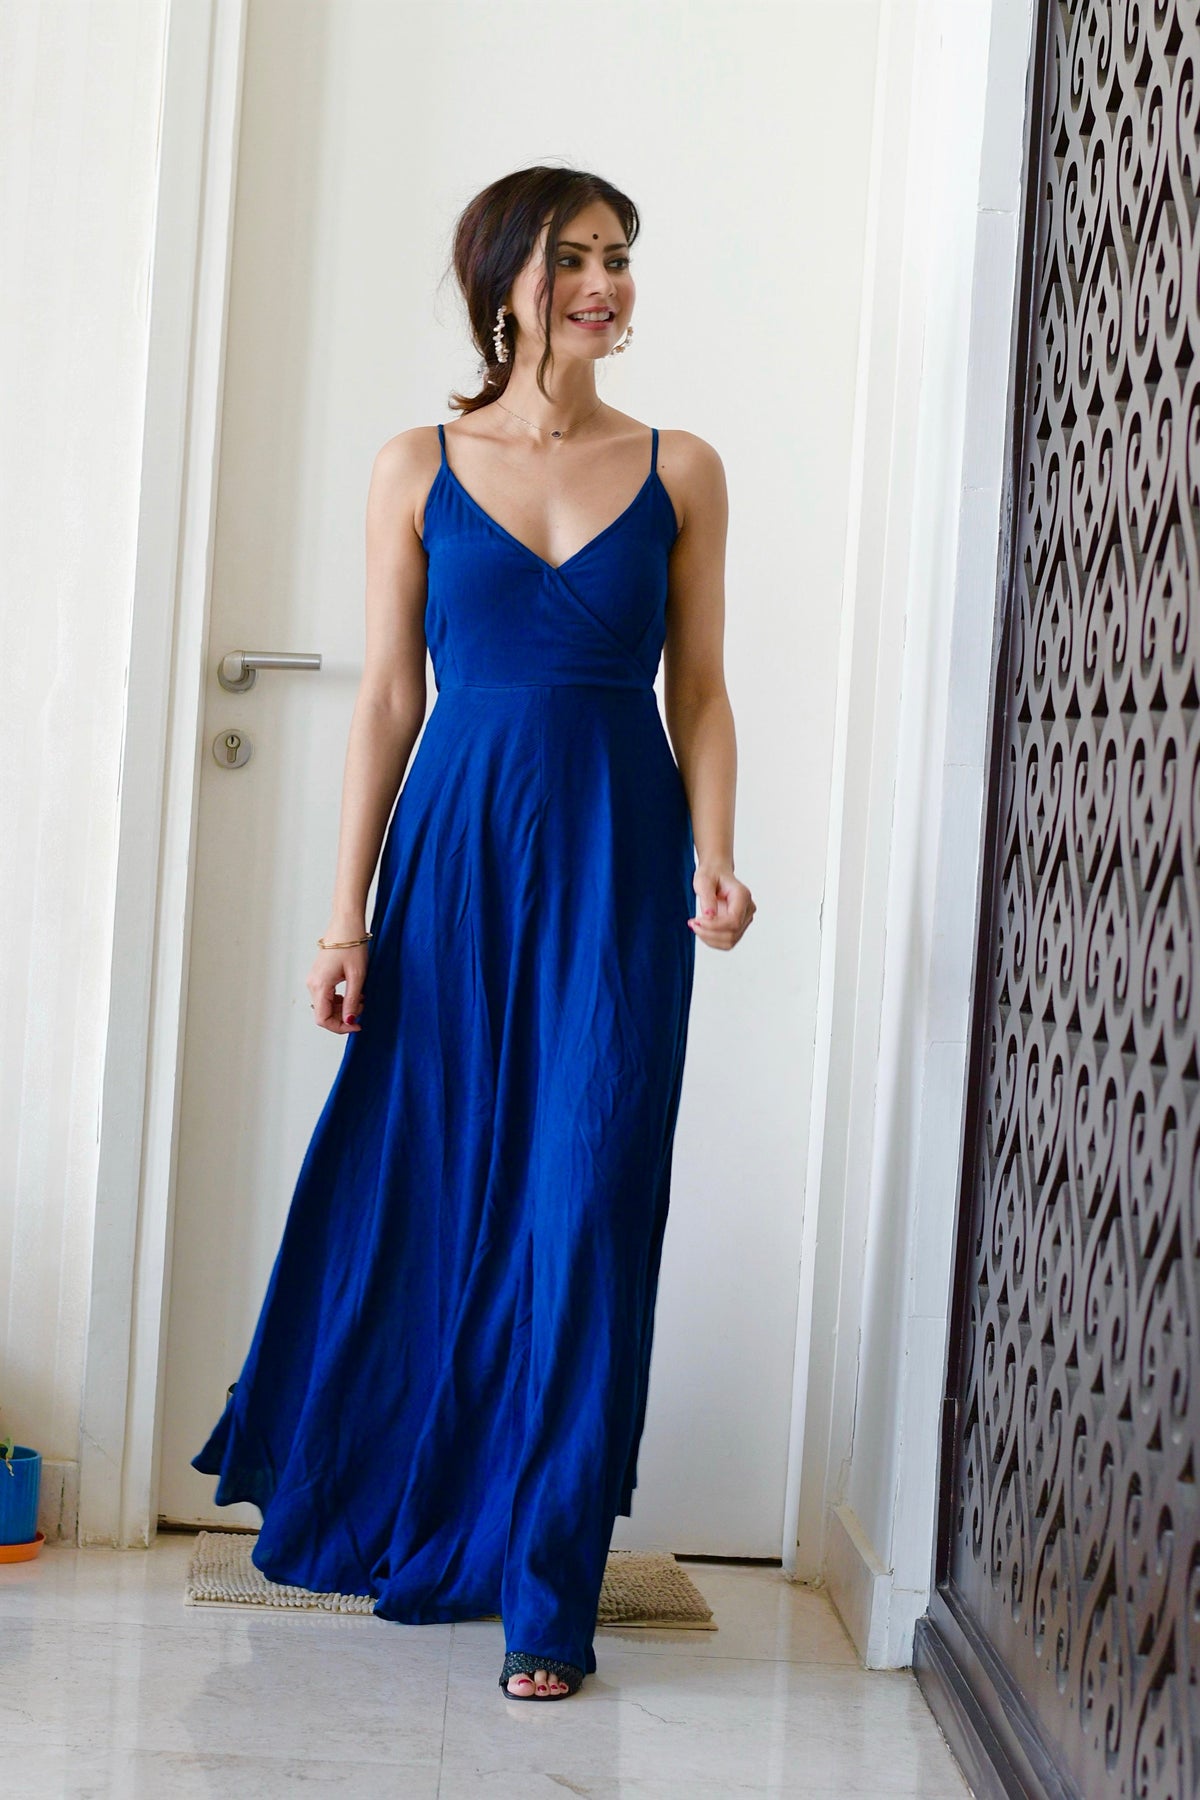 Strappy Blue Dress